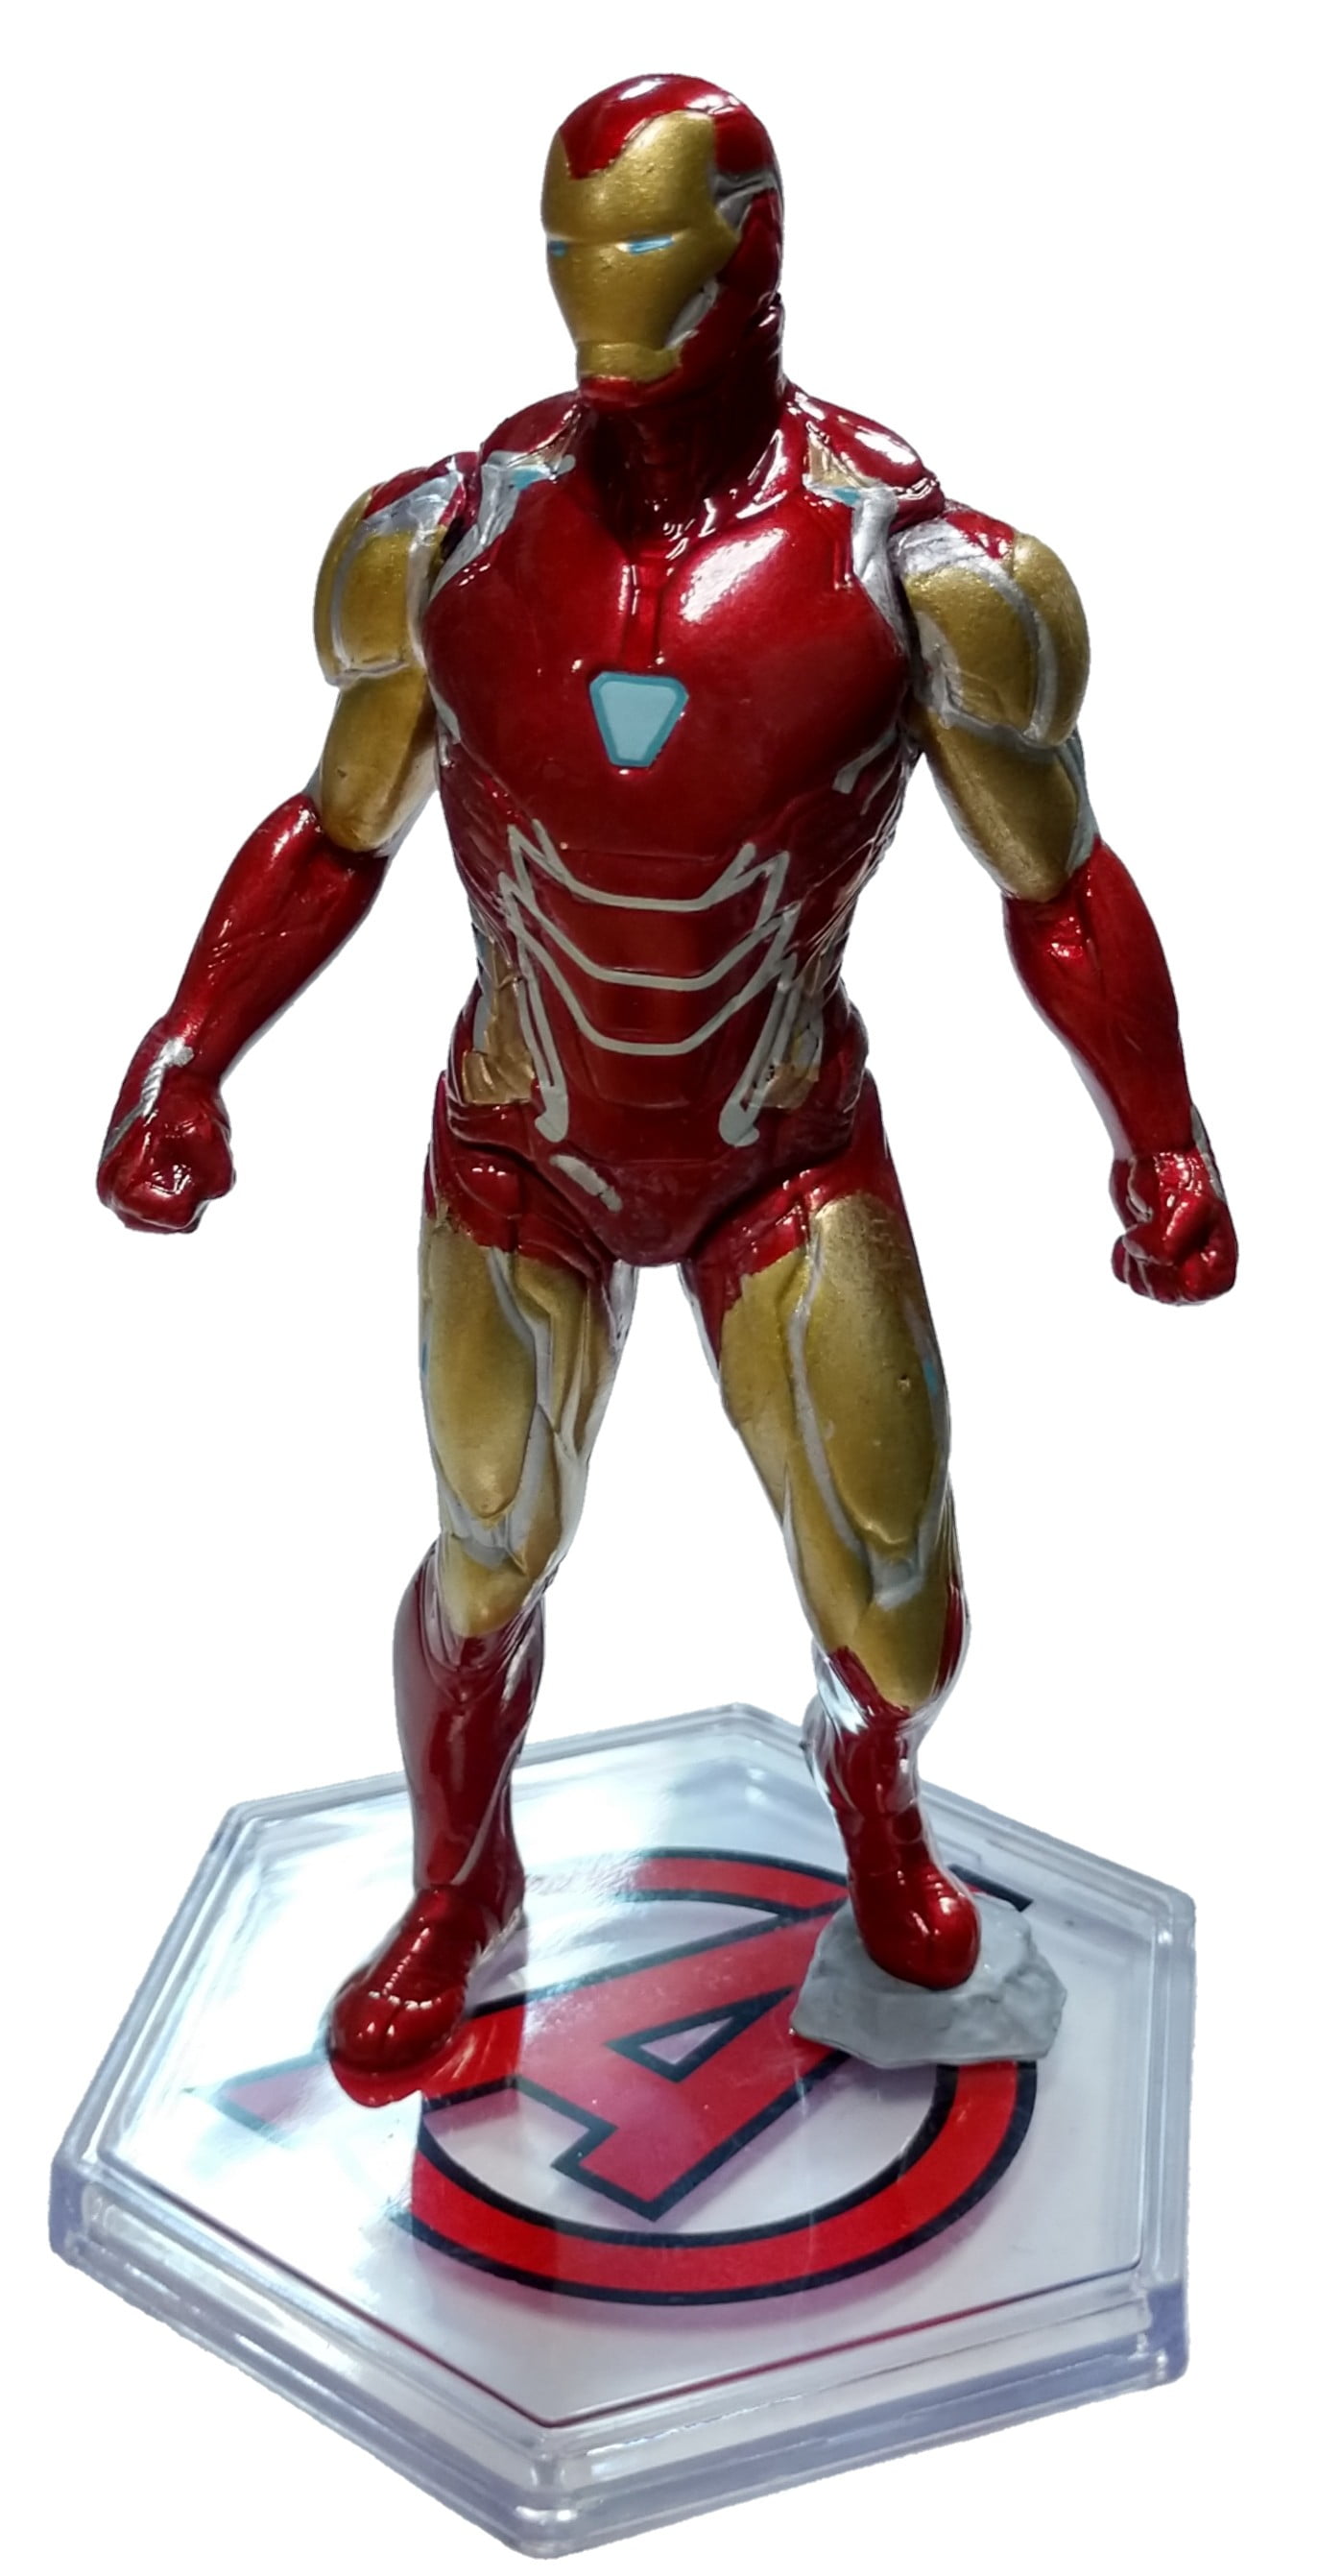 Iron Man MK46 Auto Wohnen Mini Deko-figuren toys Cell PhoneIphone 7 plus Stand 